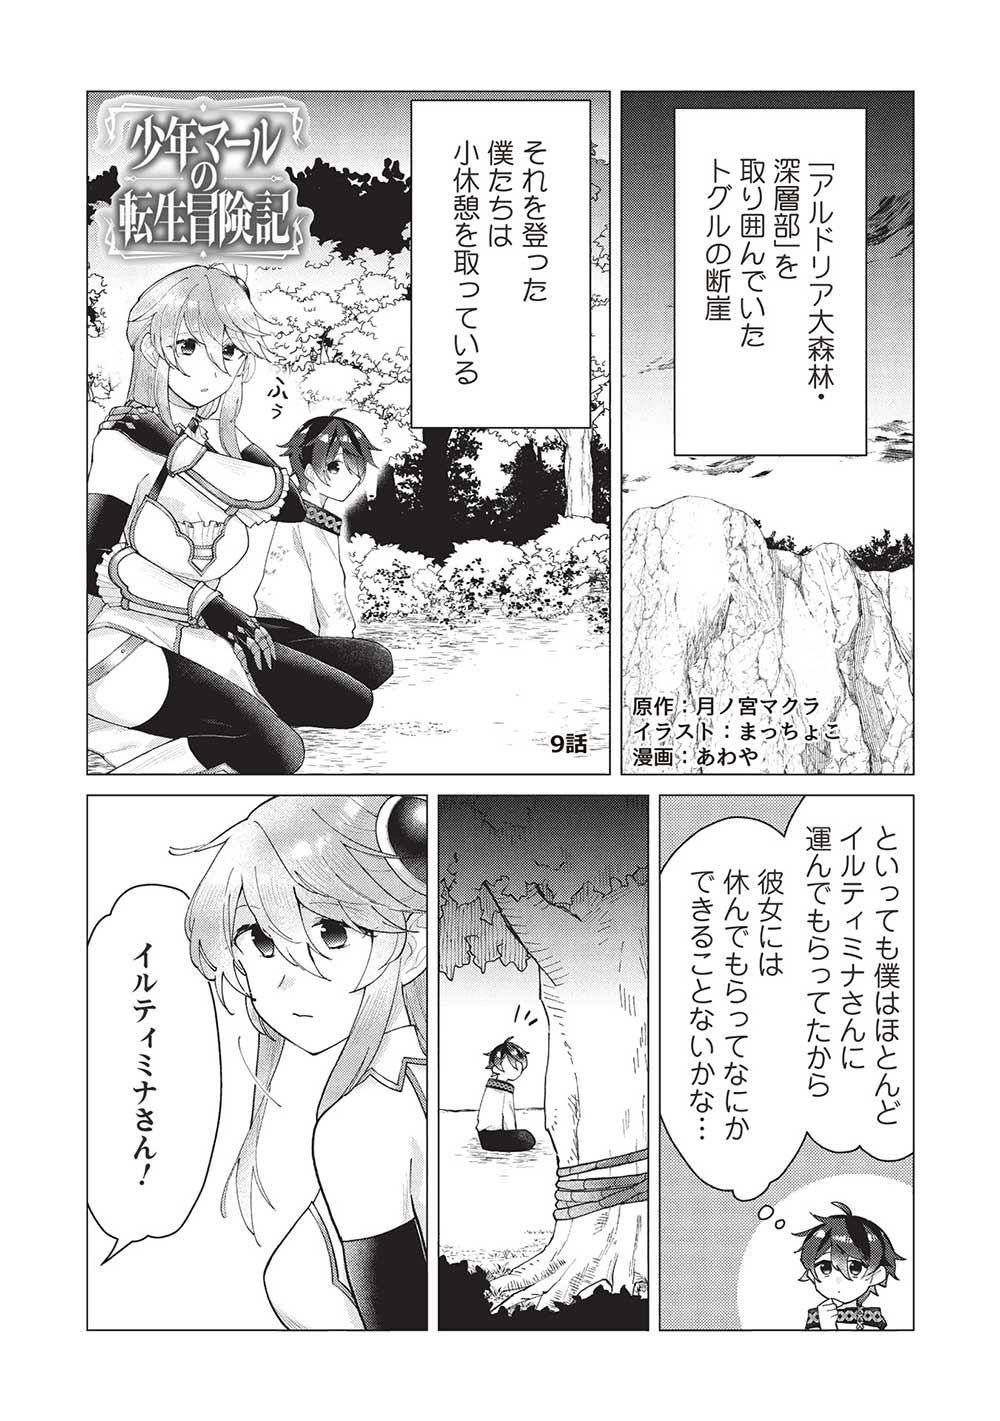 Shounen Marle no Tensei Boukenki - Chapter 9 - Page 1